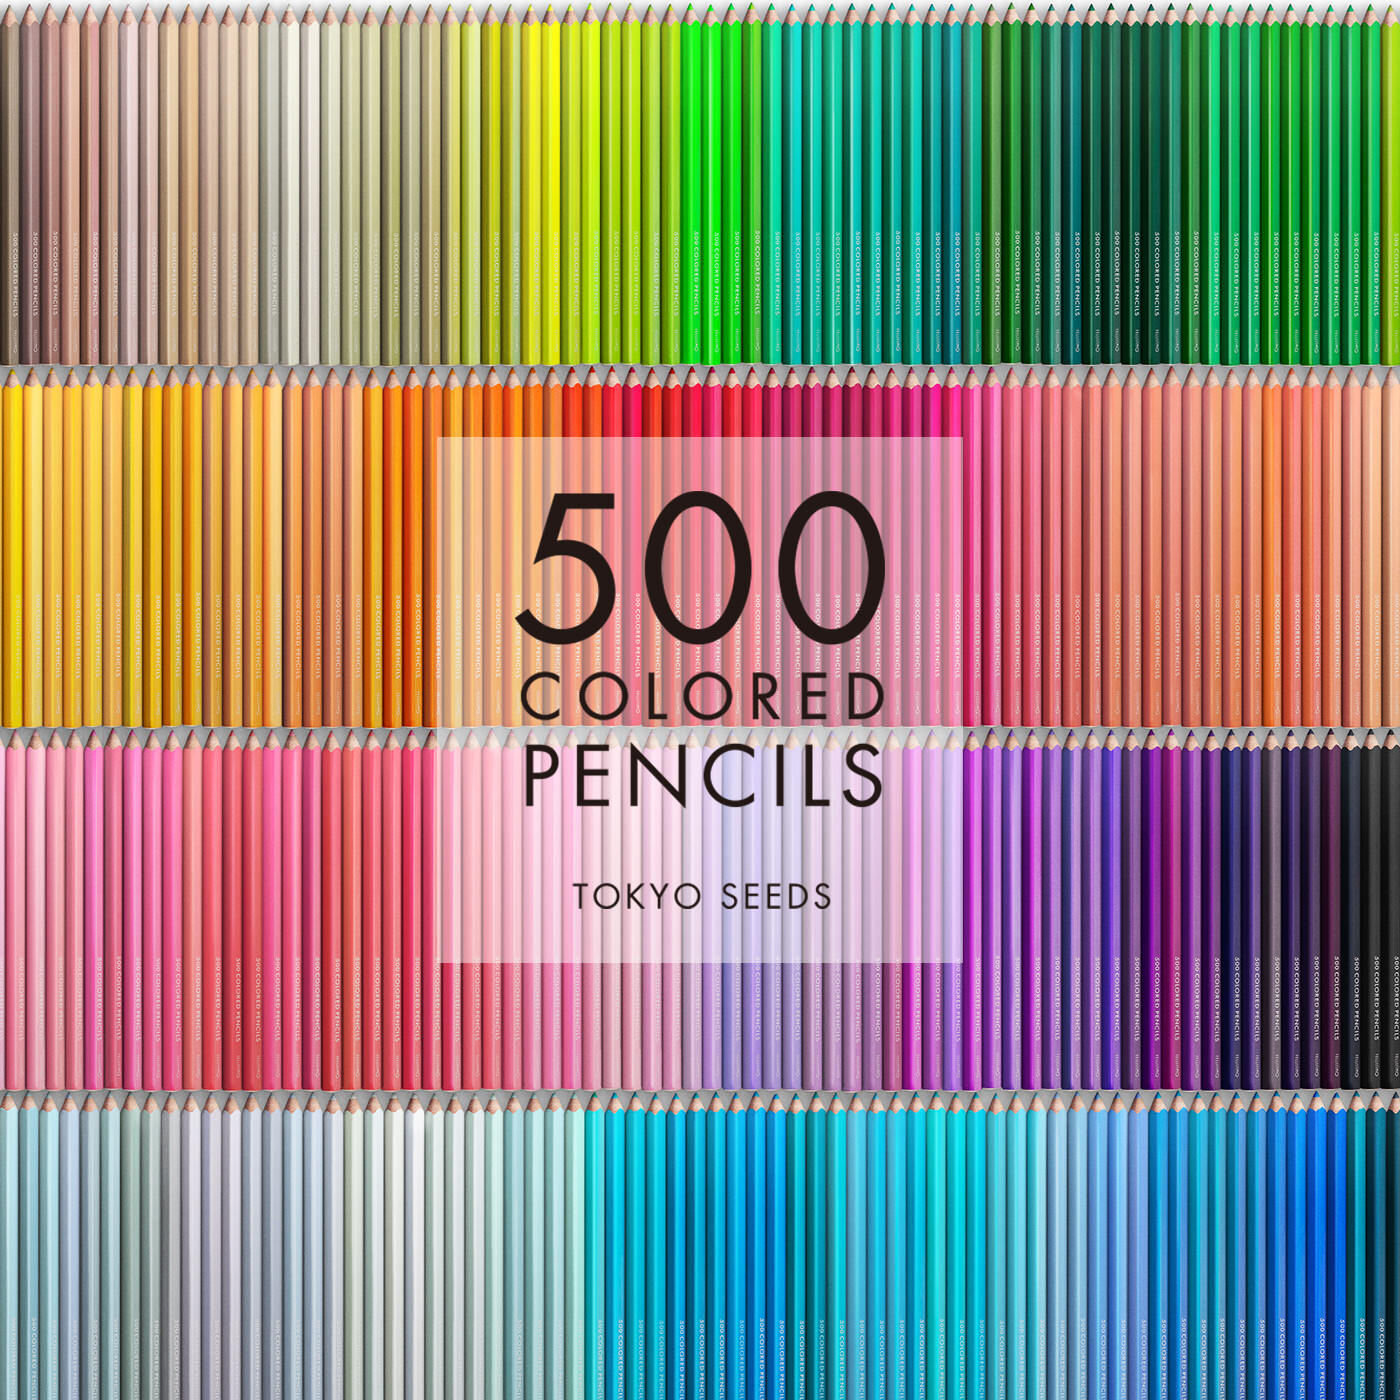 Real Stock|【40/500 MAYAN RUINS】500色の色えんぴつ TOKYO SEEDS|1992年、世界初の「500色」という膨大な色数の色えんぴつが誕生して以来、その販売数は発売当初から合わせると、世界55ヵ国10万セット以上。今回、メイド・イン・ジャパンにこだわり、すべてが新しく生まれ変わって登場しました。